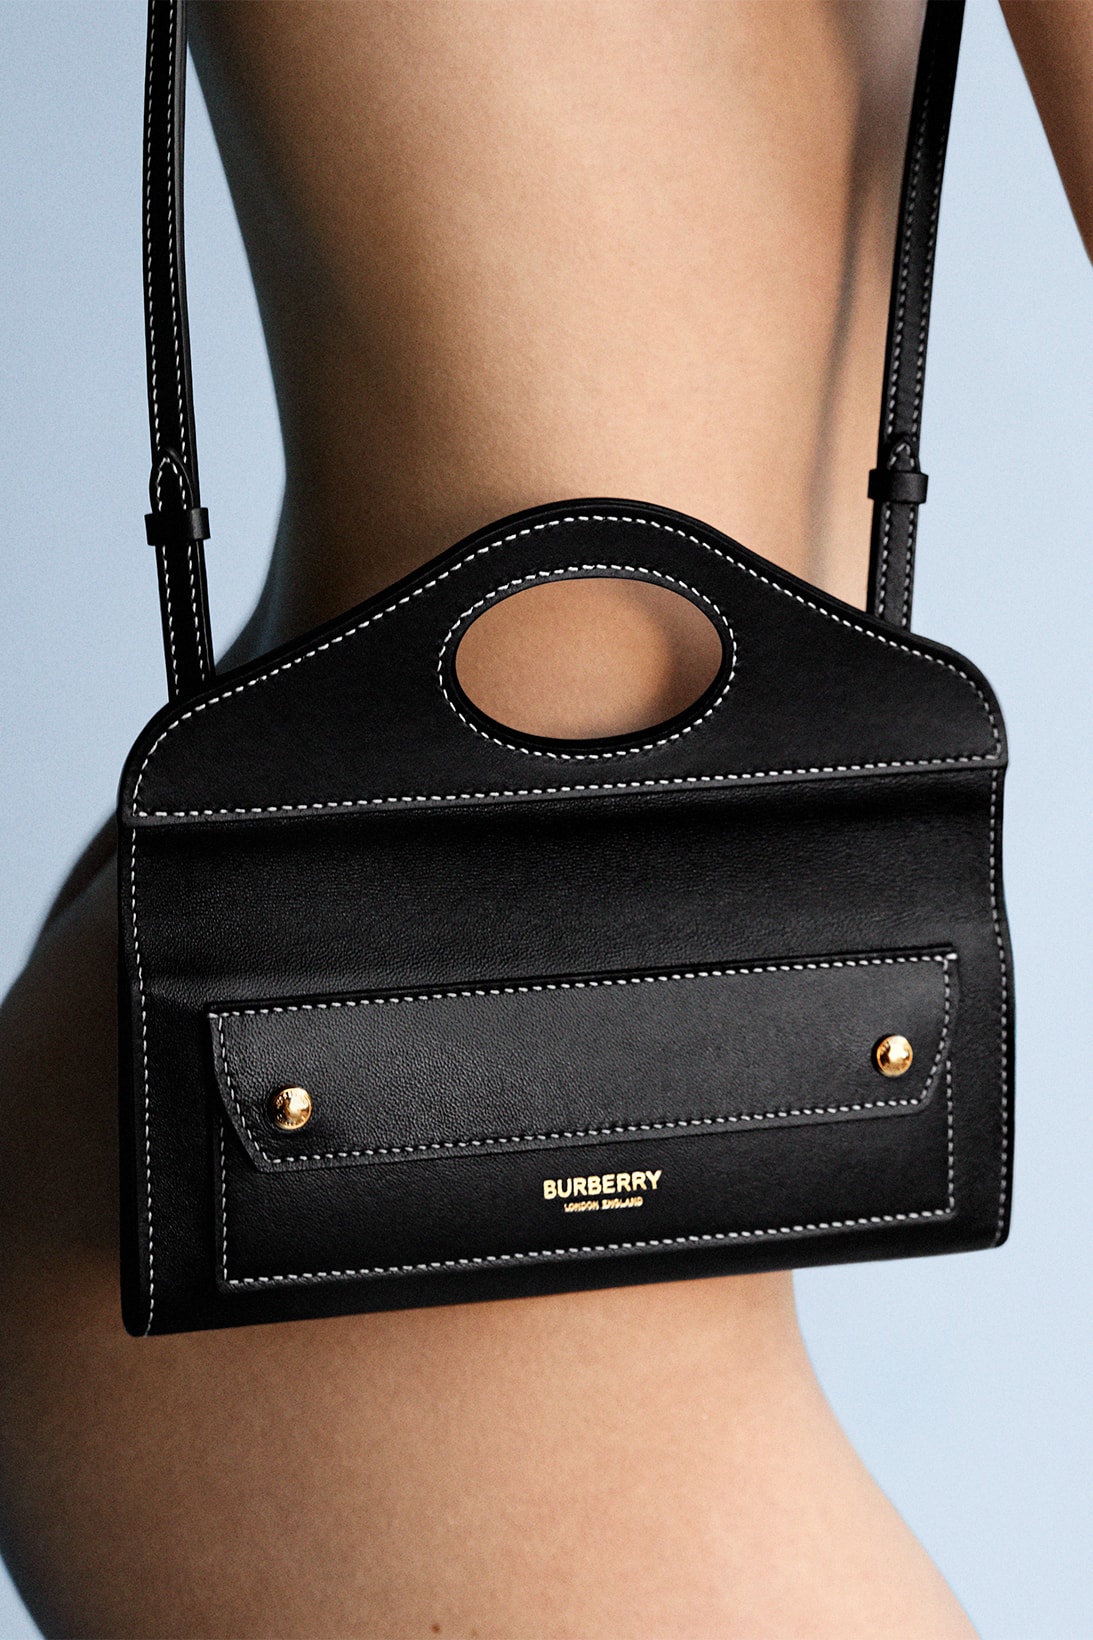 burberry b series mini pocket bag black designer riccardo tisci